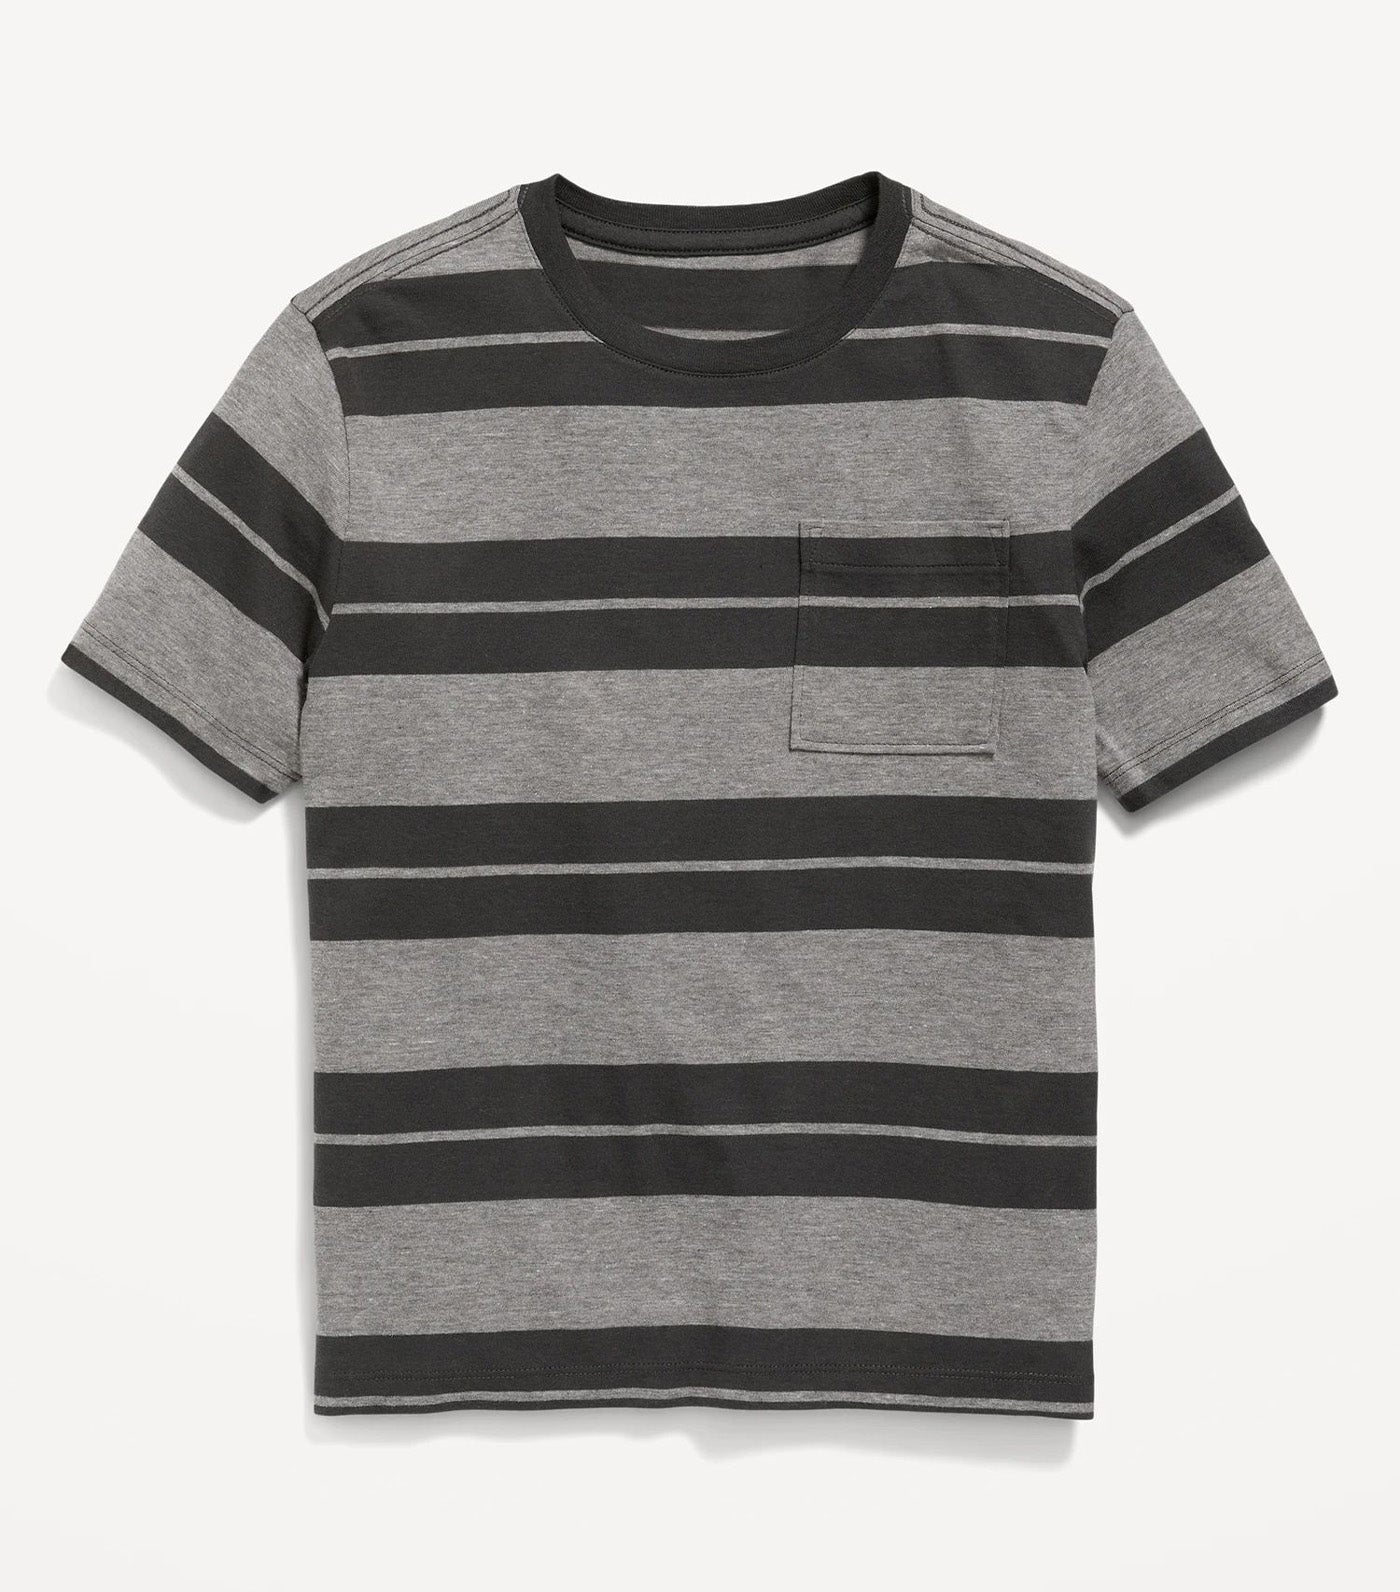 Softest Short-Sleeve Striped Pocket T-Shirt for Boys - Grey Stripe